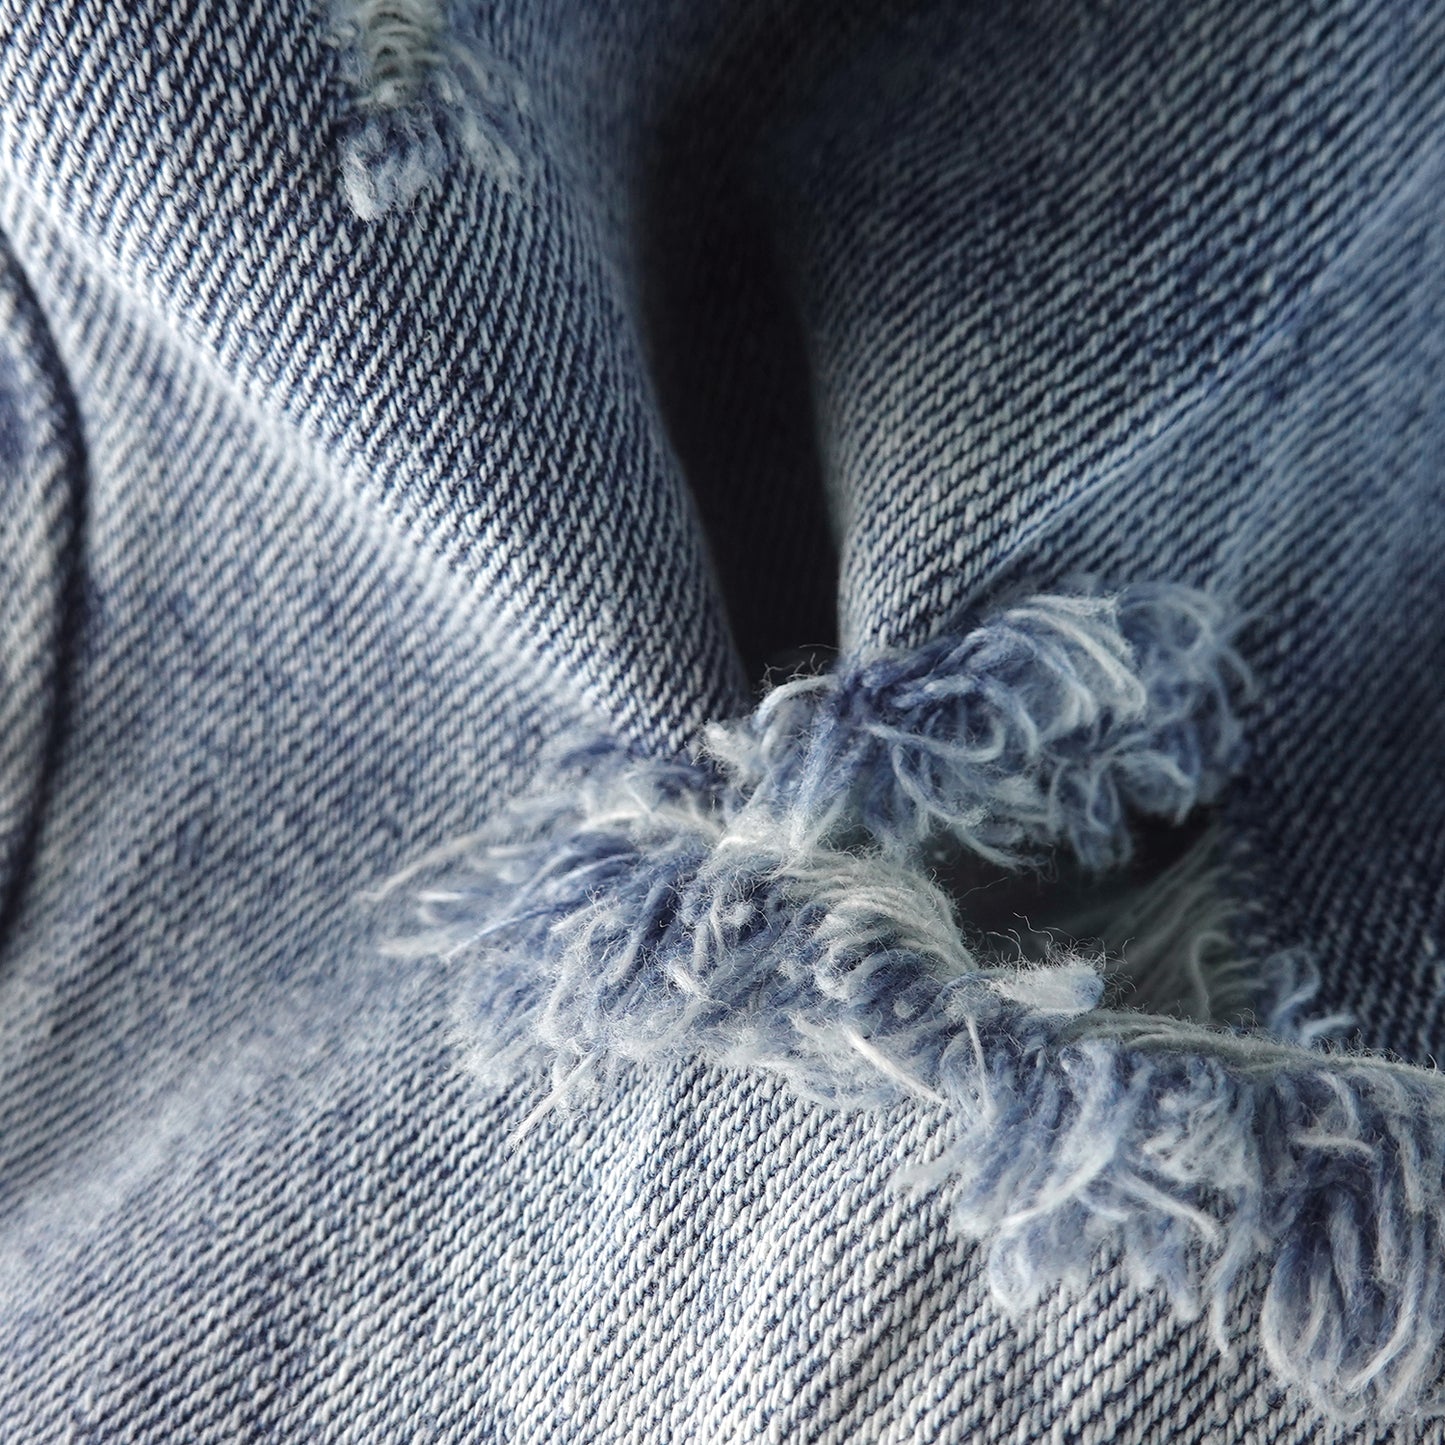 Baby Denim Shorts,Elastic WaistBand Inside Ripped Holes Summer Half Jeans